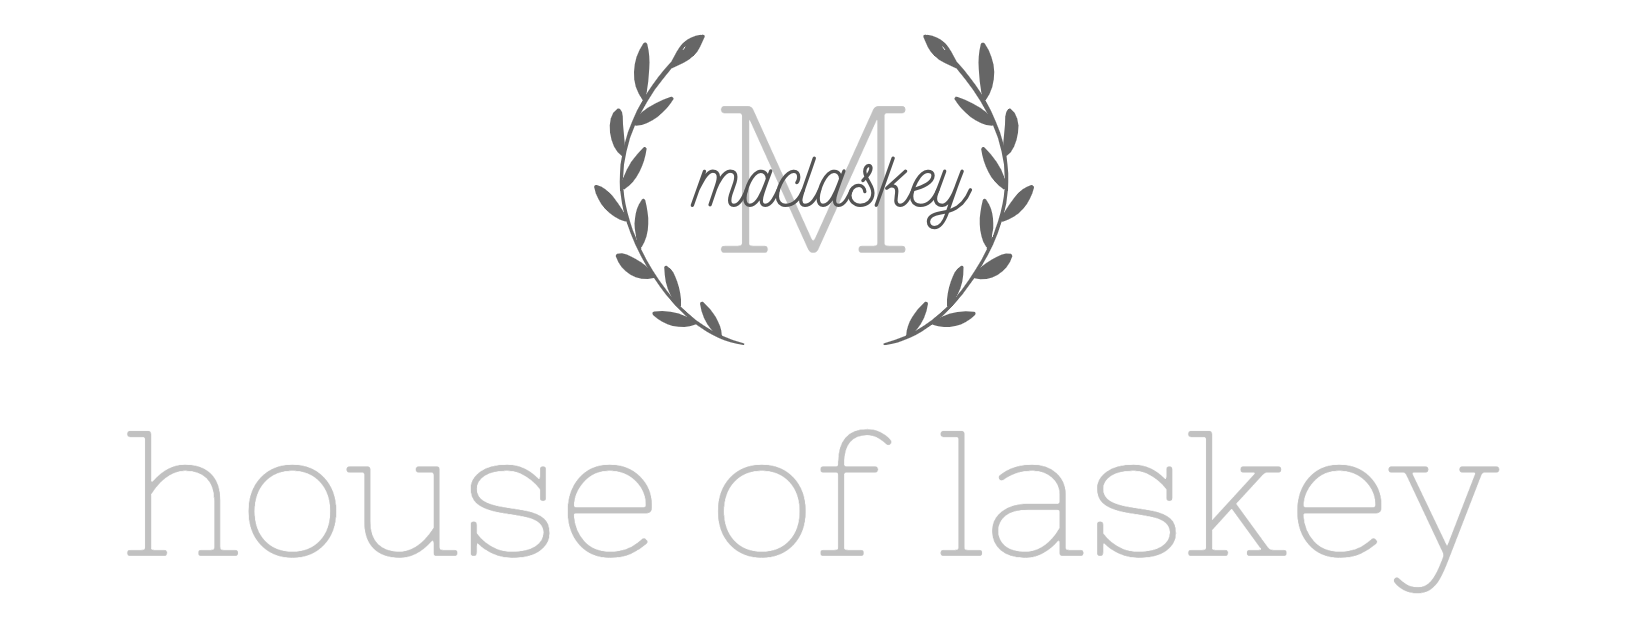 house of laskey